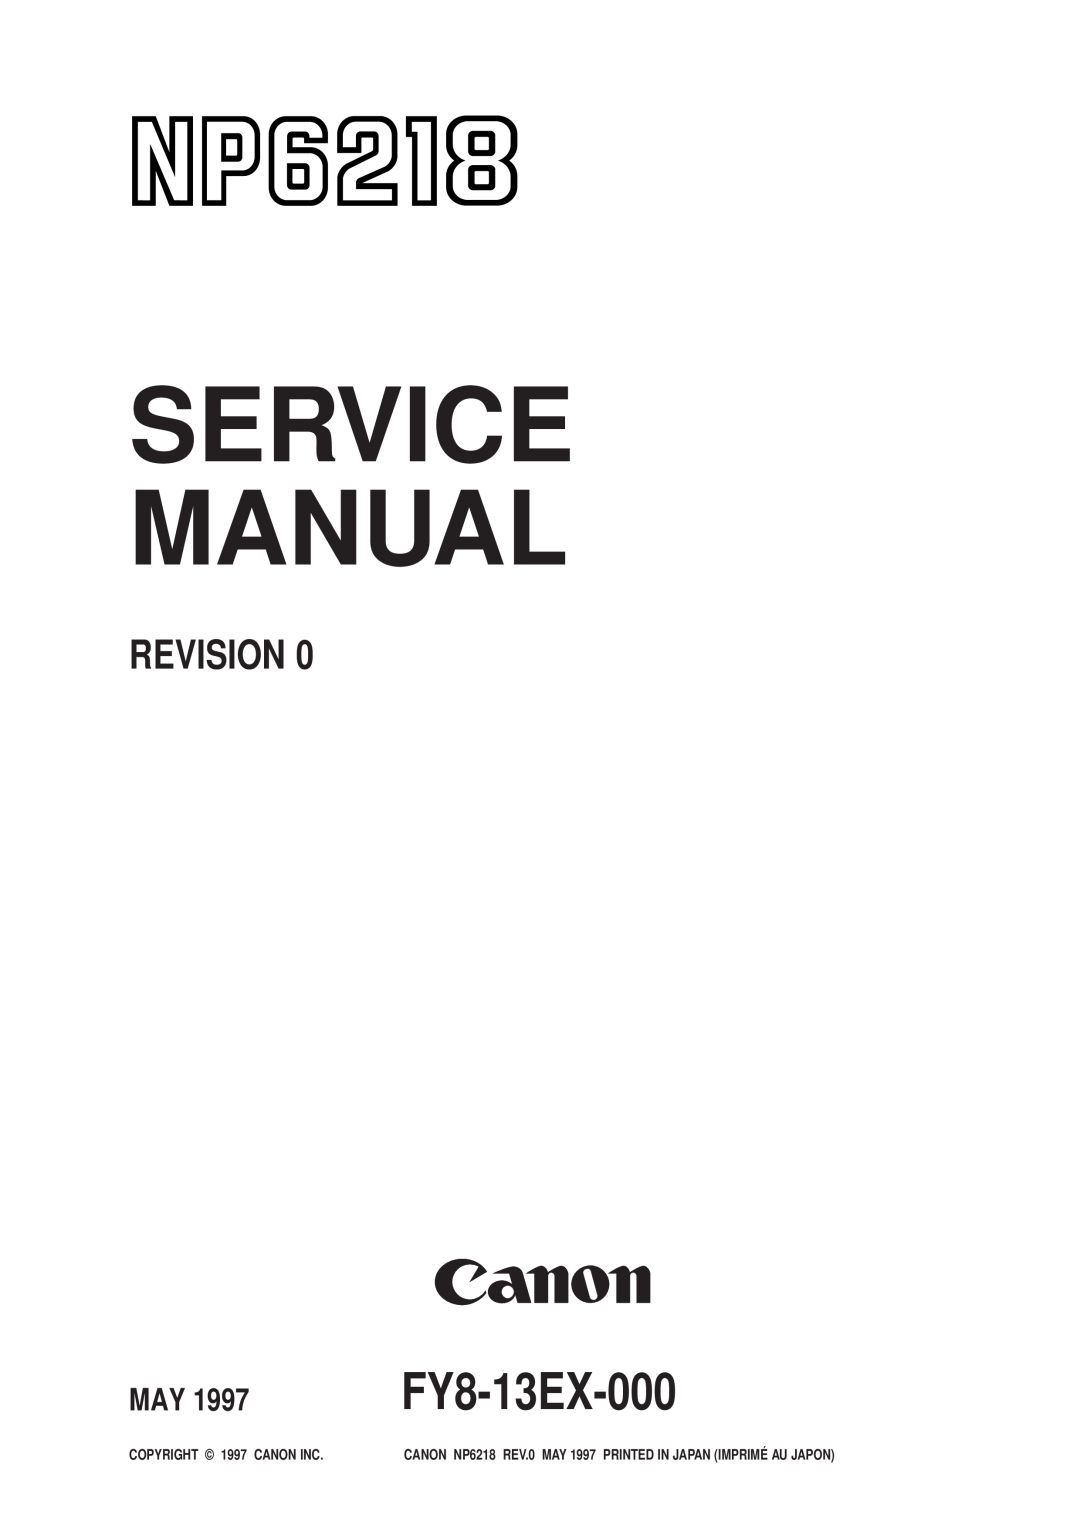 Canon FY8-13EX-000, NP6218 service manual Service Manual, Revision, COPYRIGHT 1997 CANON INC 